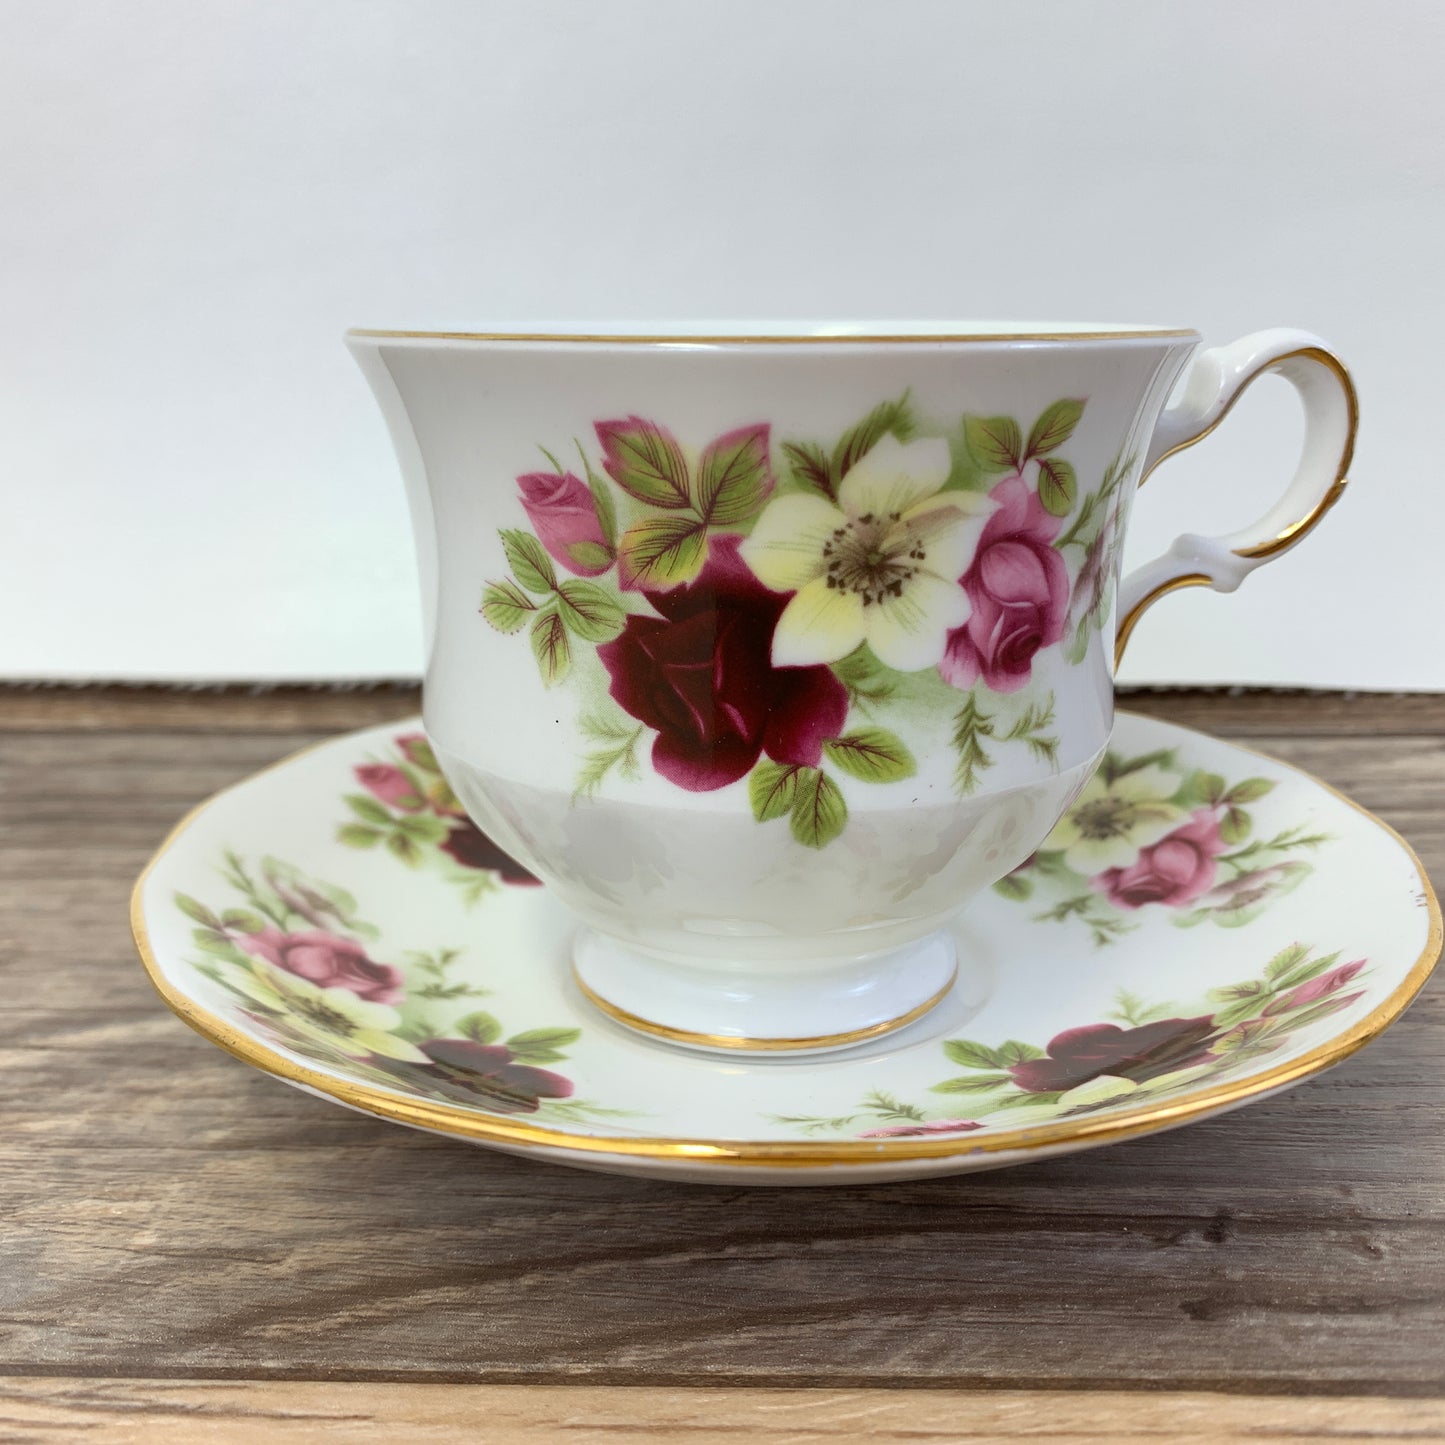 Vintage Bone China Teacup with Tea Rose Floral Pattern